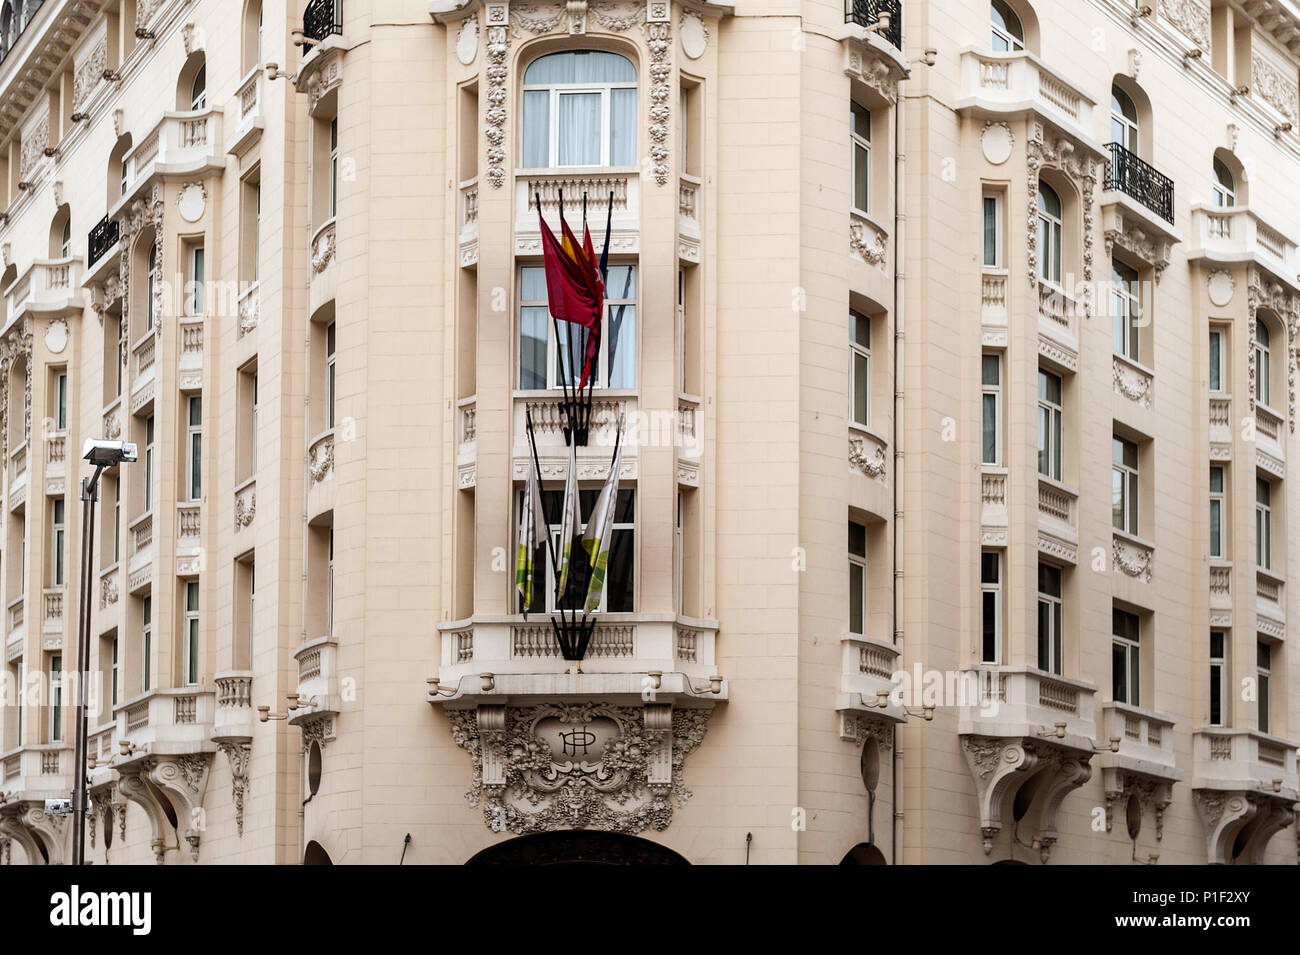 Detalle exterior del hotel Westin Palace, Madrid, España. Foto de stock